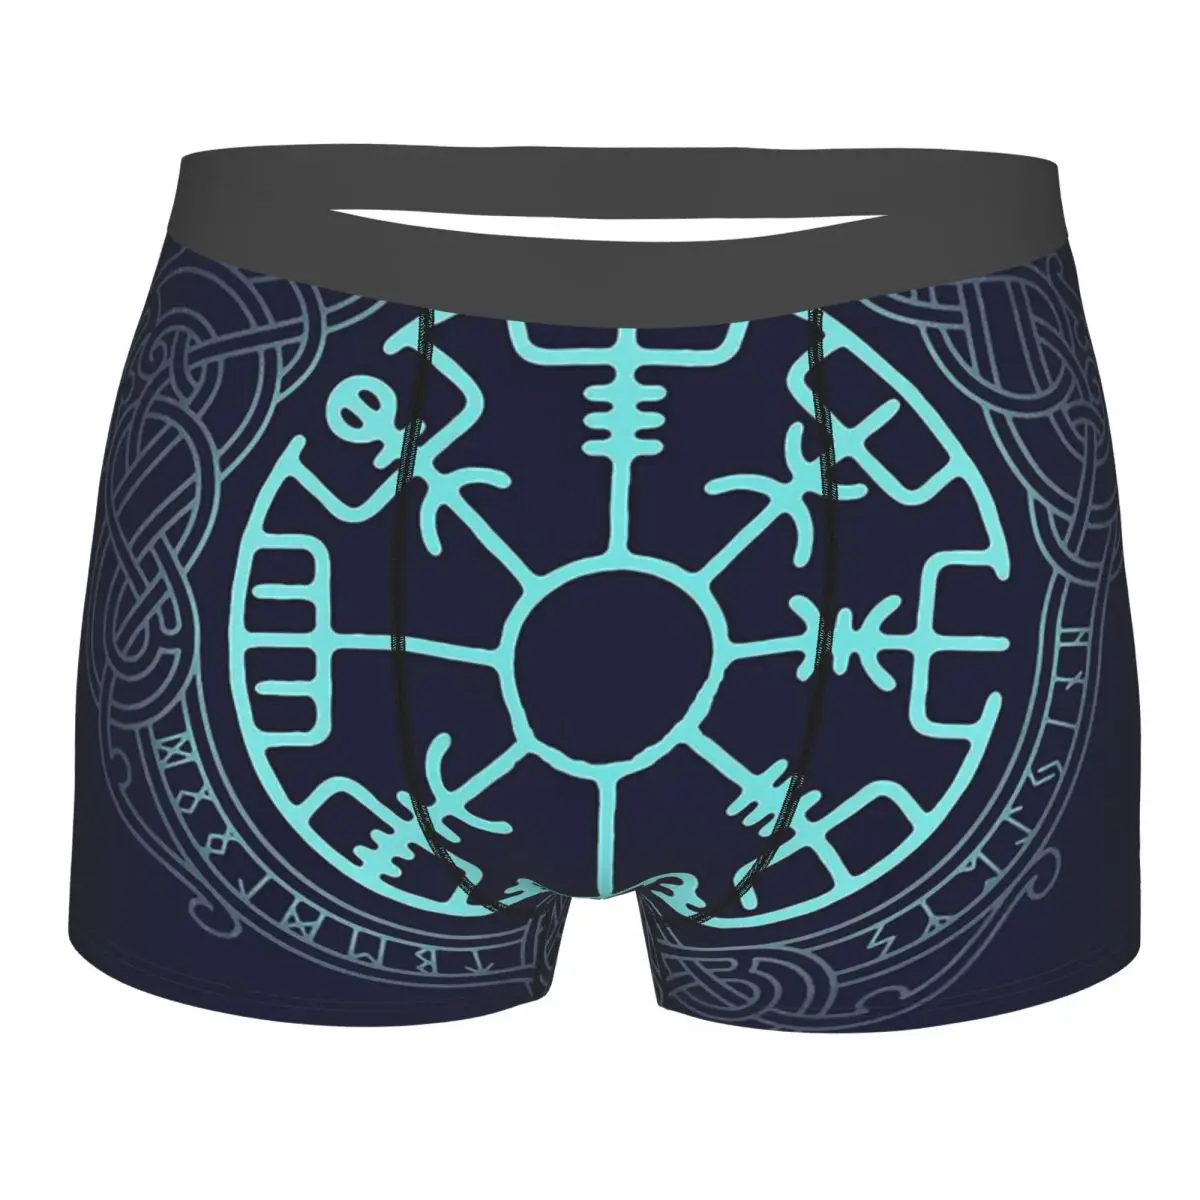 Vikings Underpants Cotton Panties Man Underwear Sexy VEGVISIR Shorts Briefs